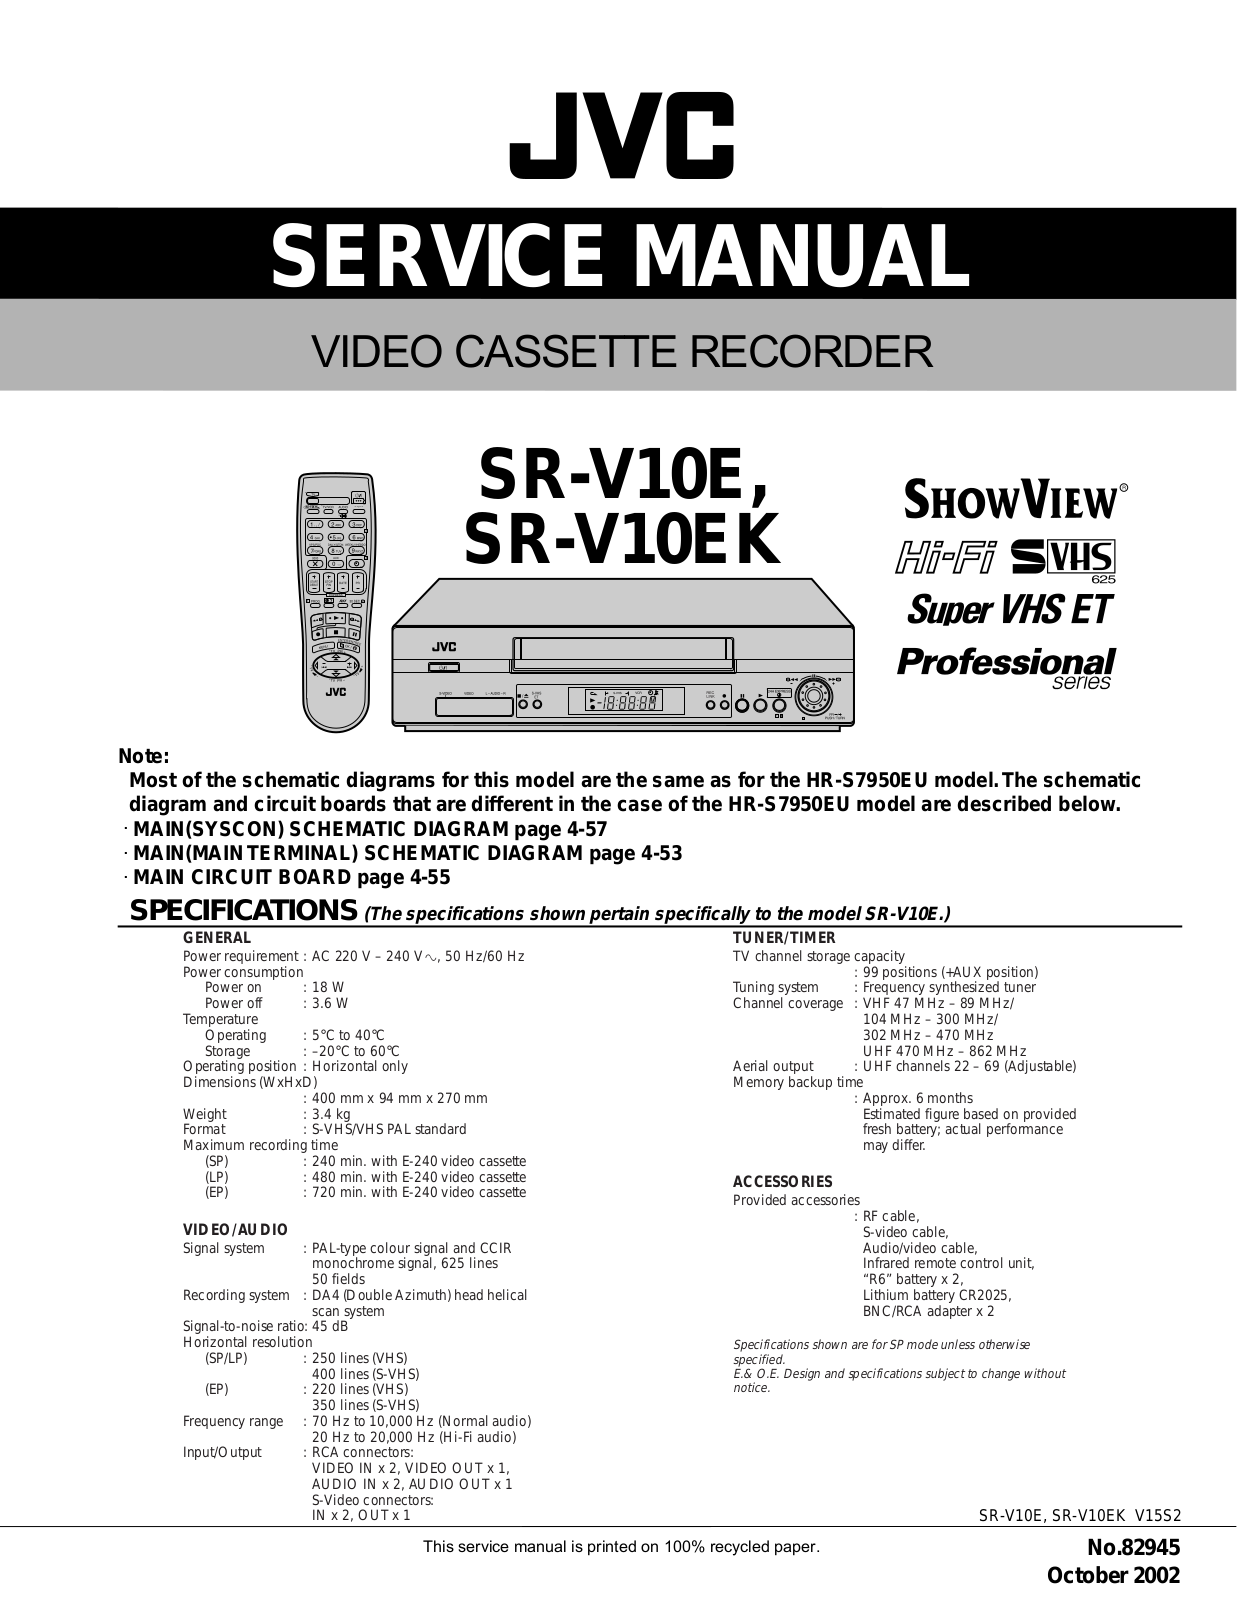 Jvc SR-V10 Service Manual